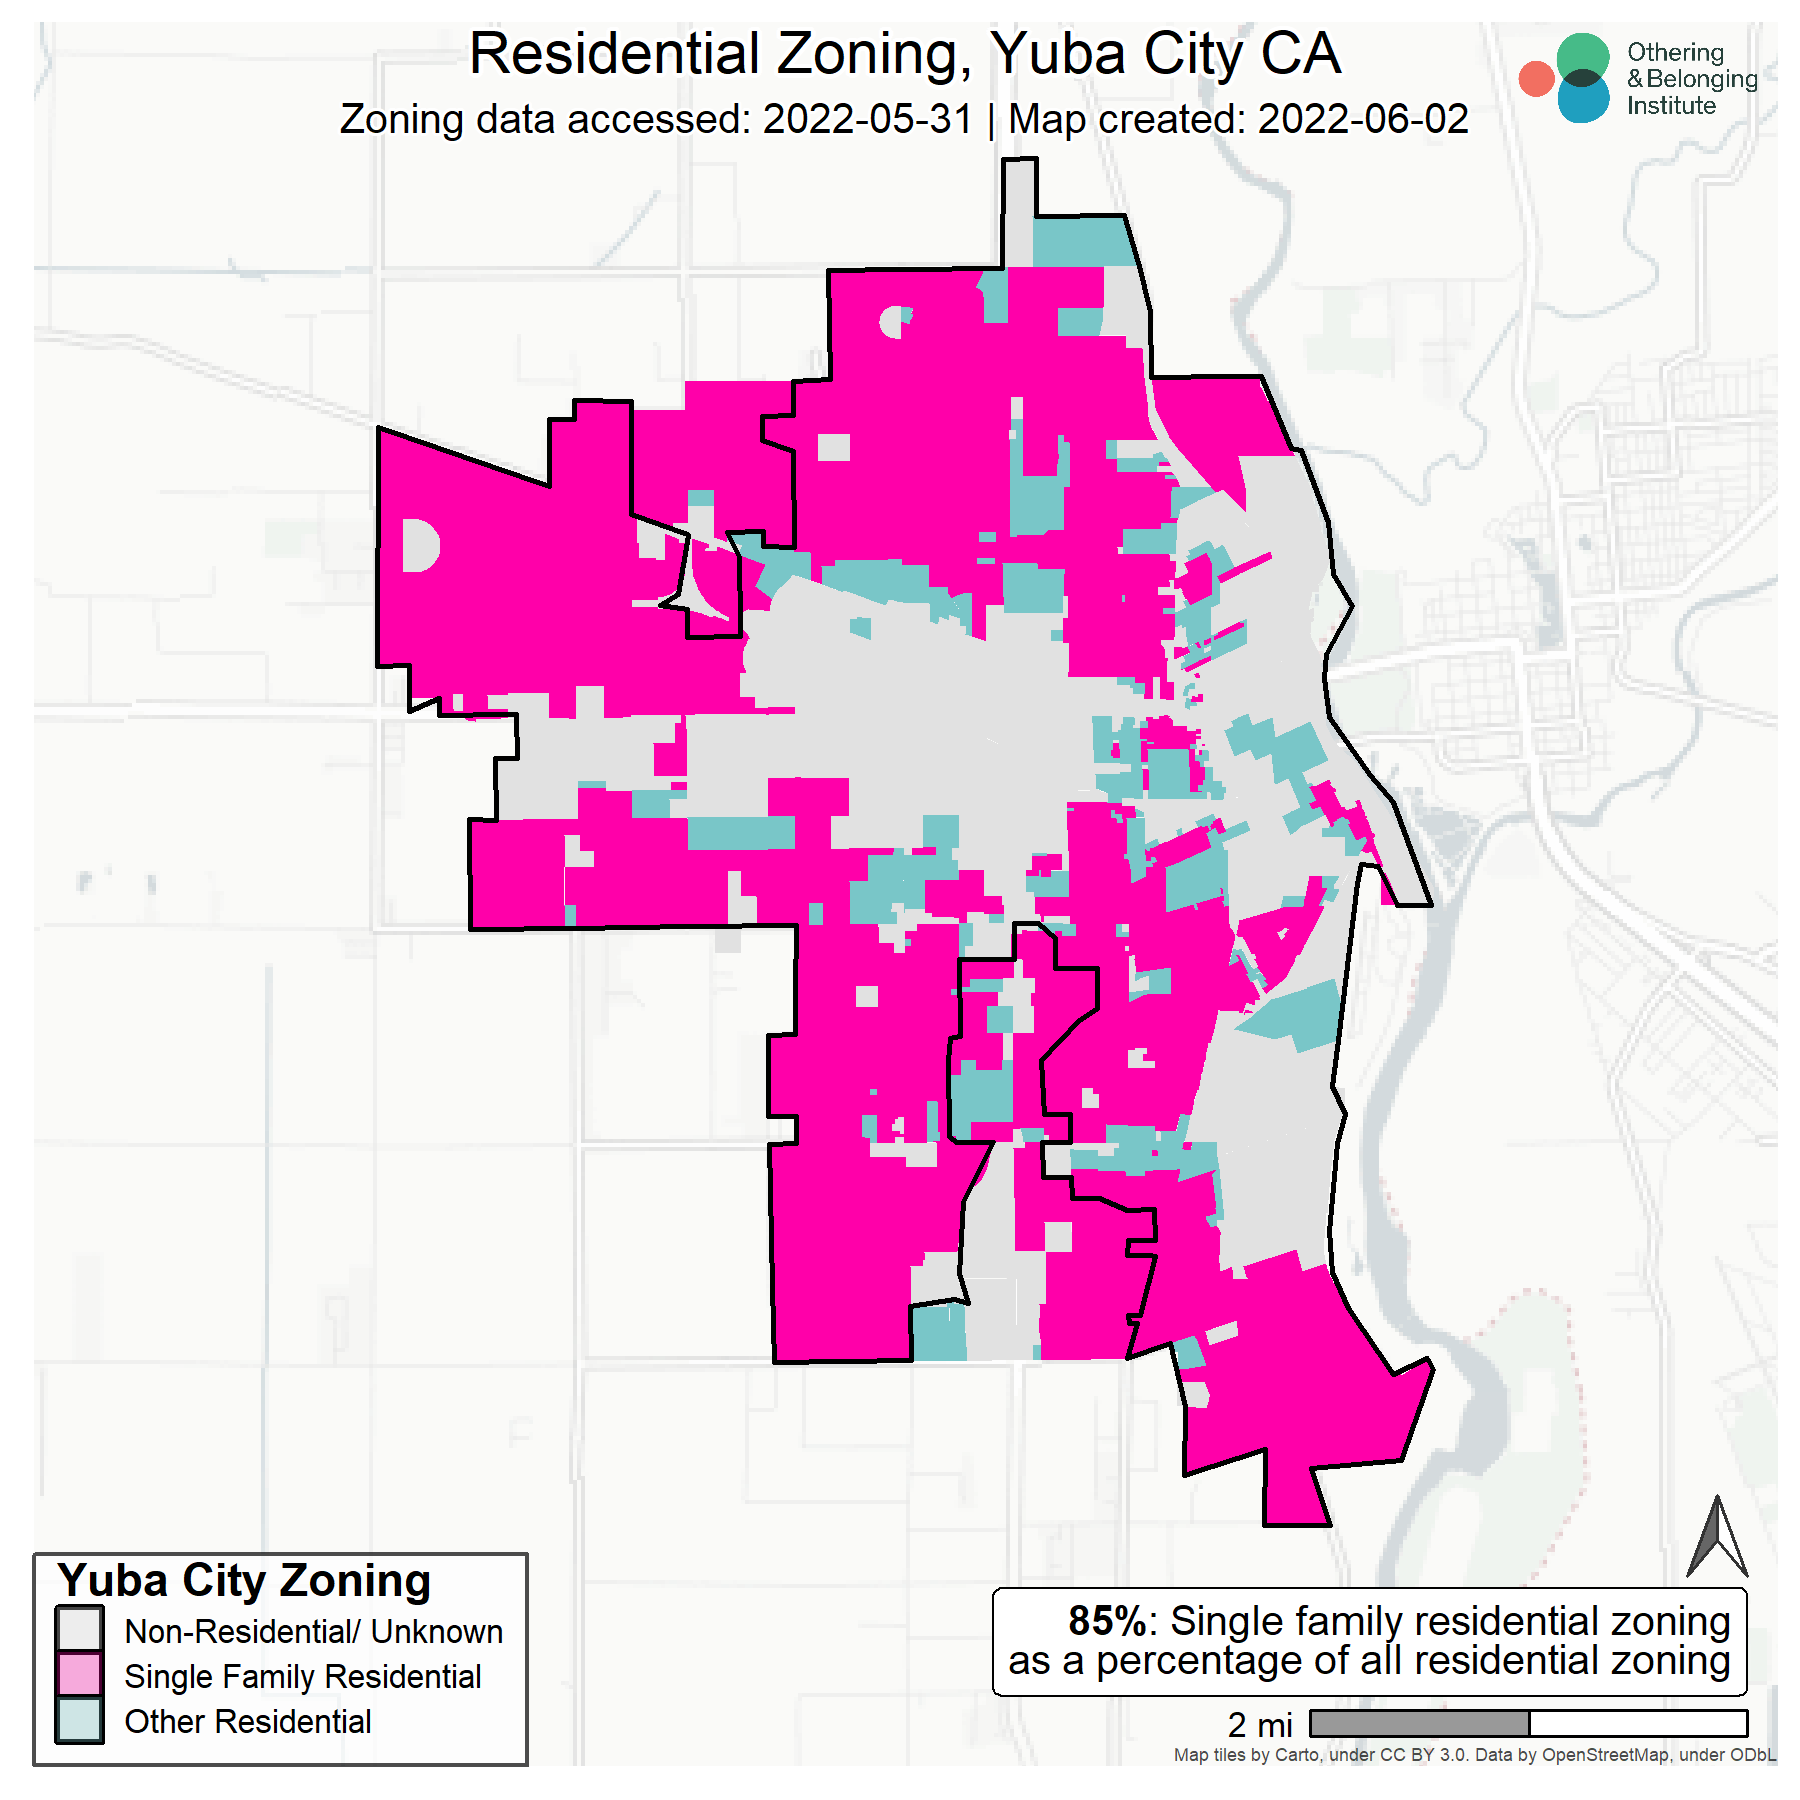 Zoning map of Yuba City